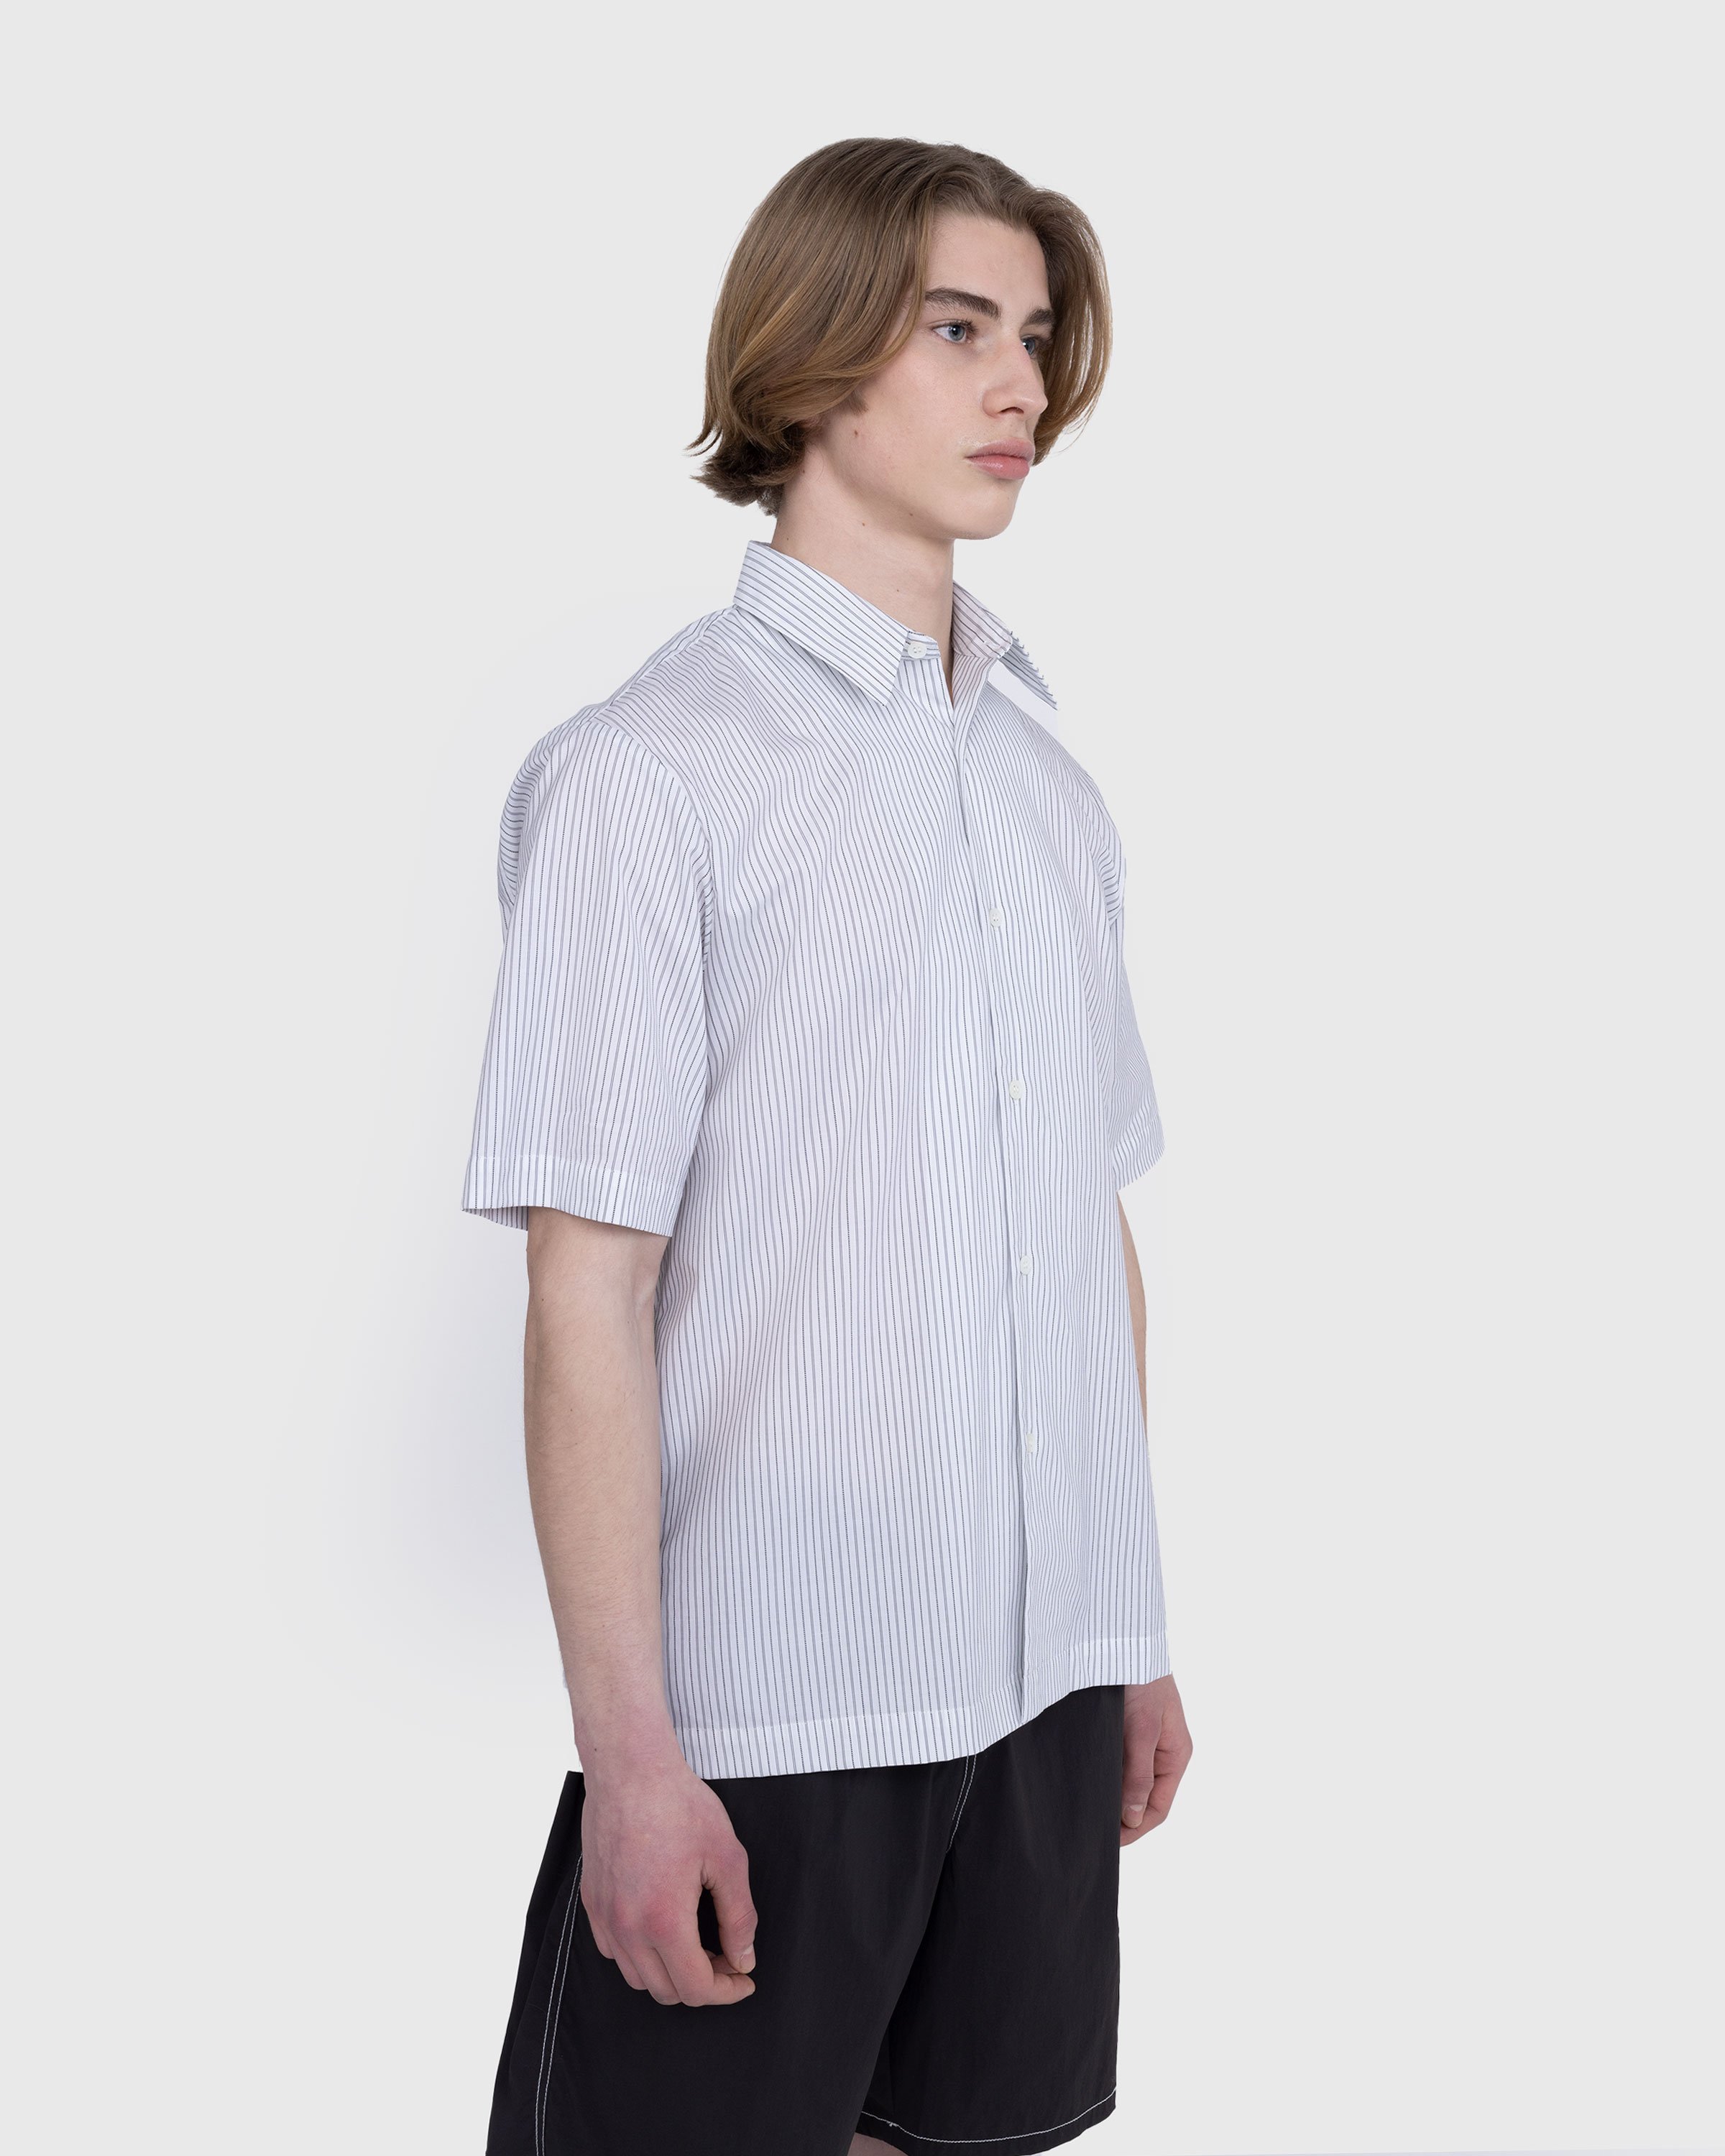 Dries van Noten - Clasen Shirt White - Clothing - White - Image 4